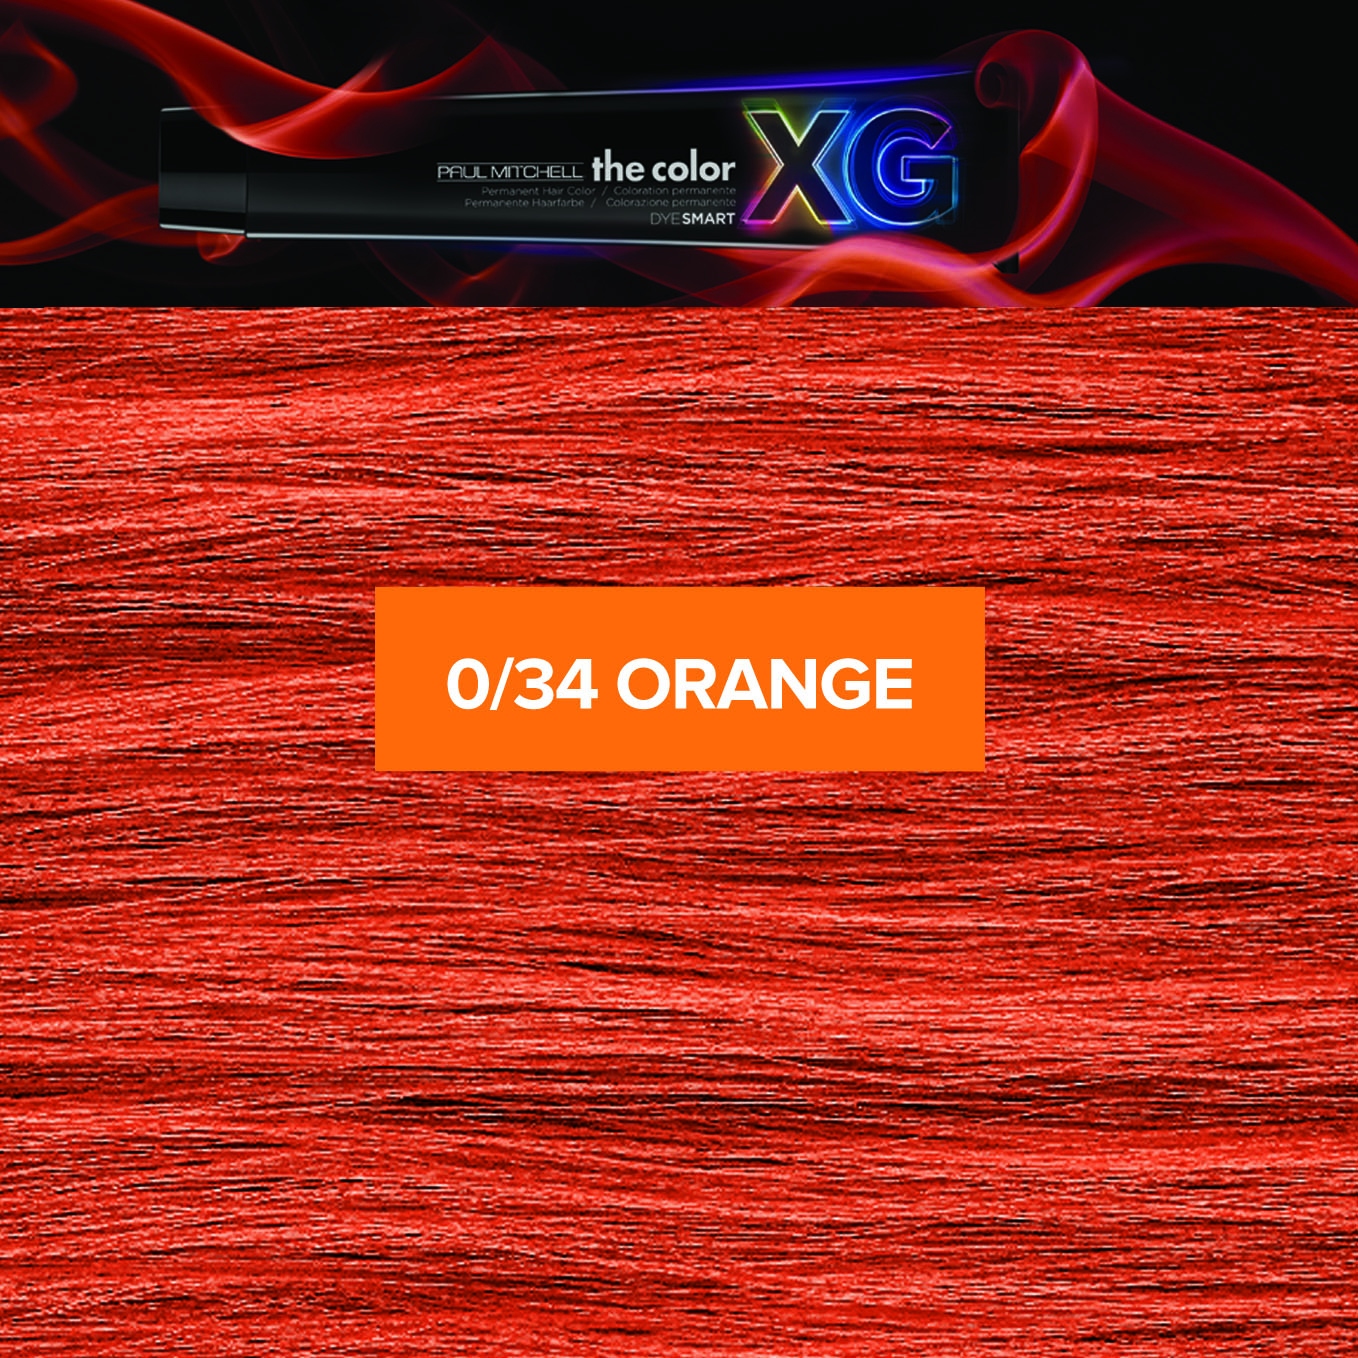 Red XG Logo - 34 (Orange) - Paul Mitchell the color XG - Sullivan Beauty